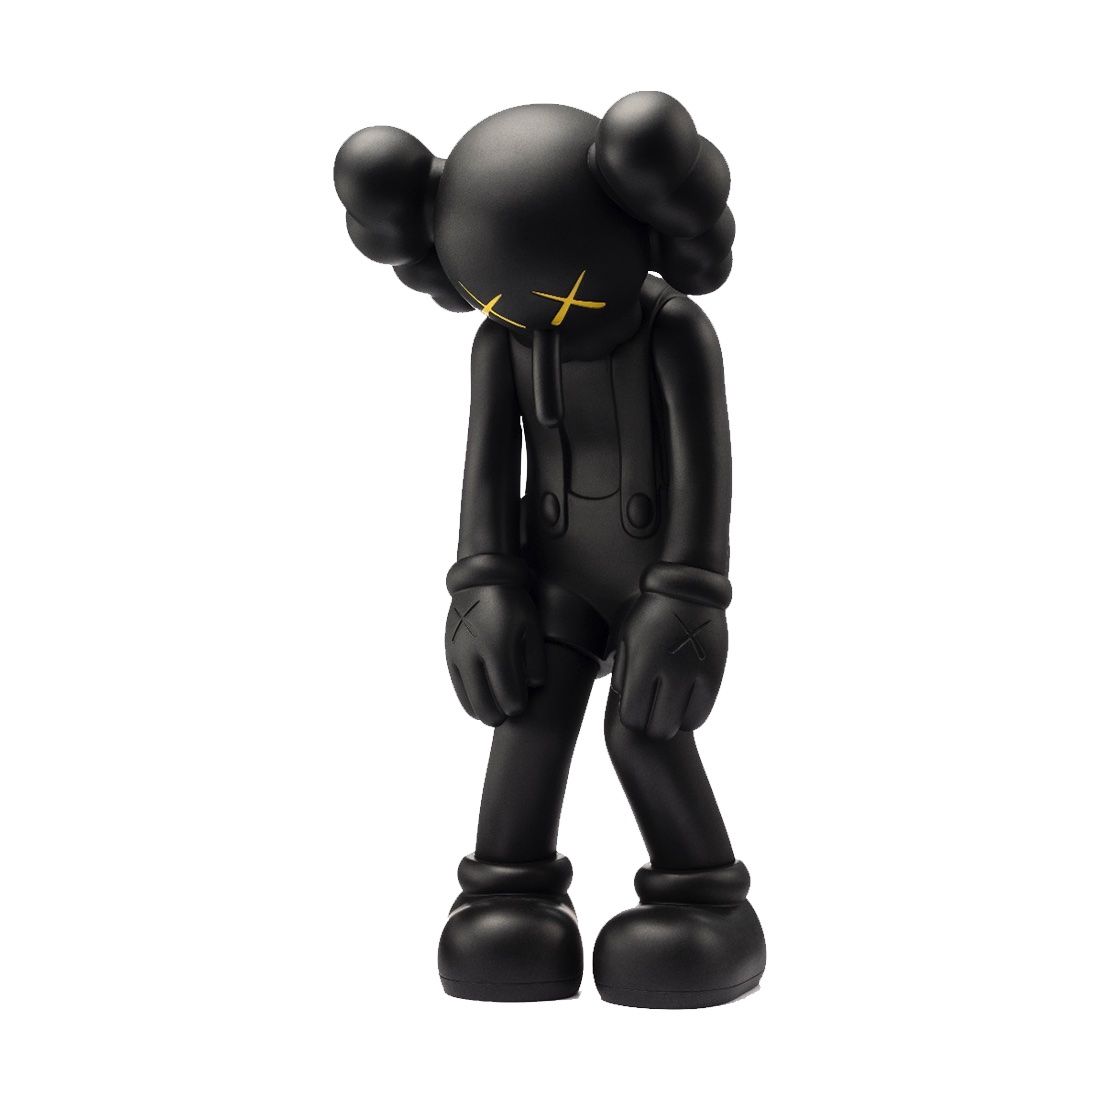 KAWS - SMALL LIE - Black PEQUEÑA MENTIRA
Escultura de vinilo
28x6cm